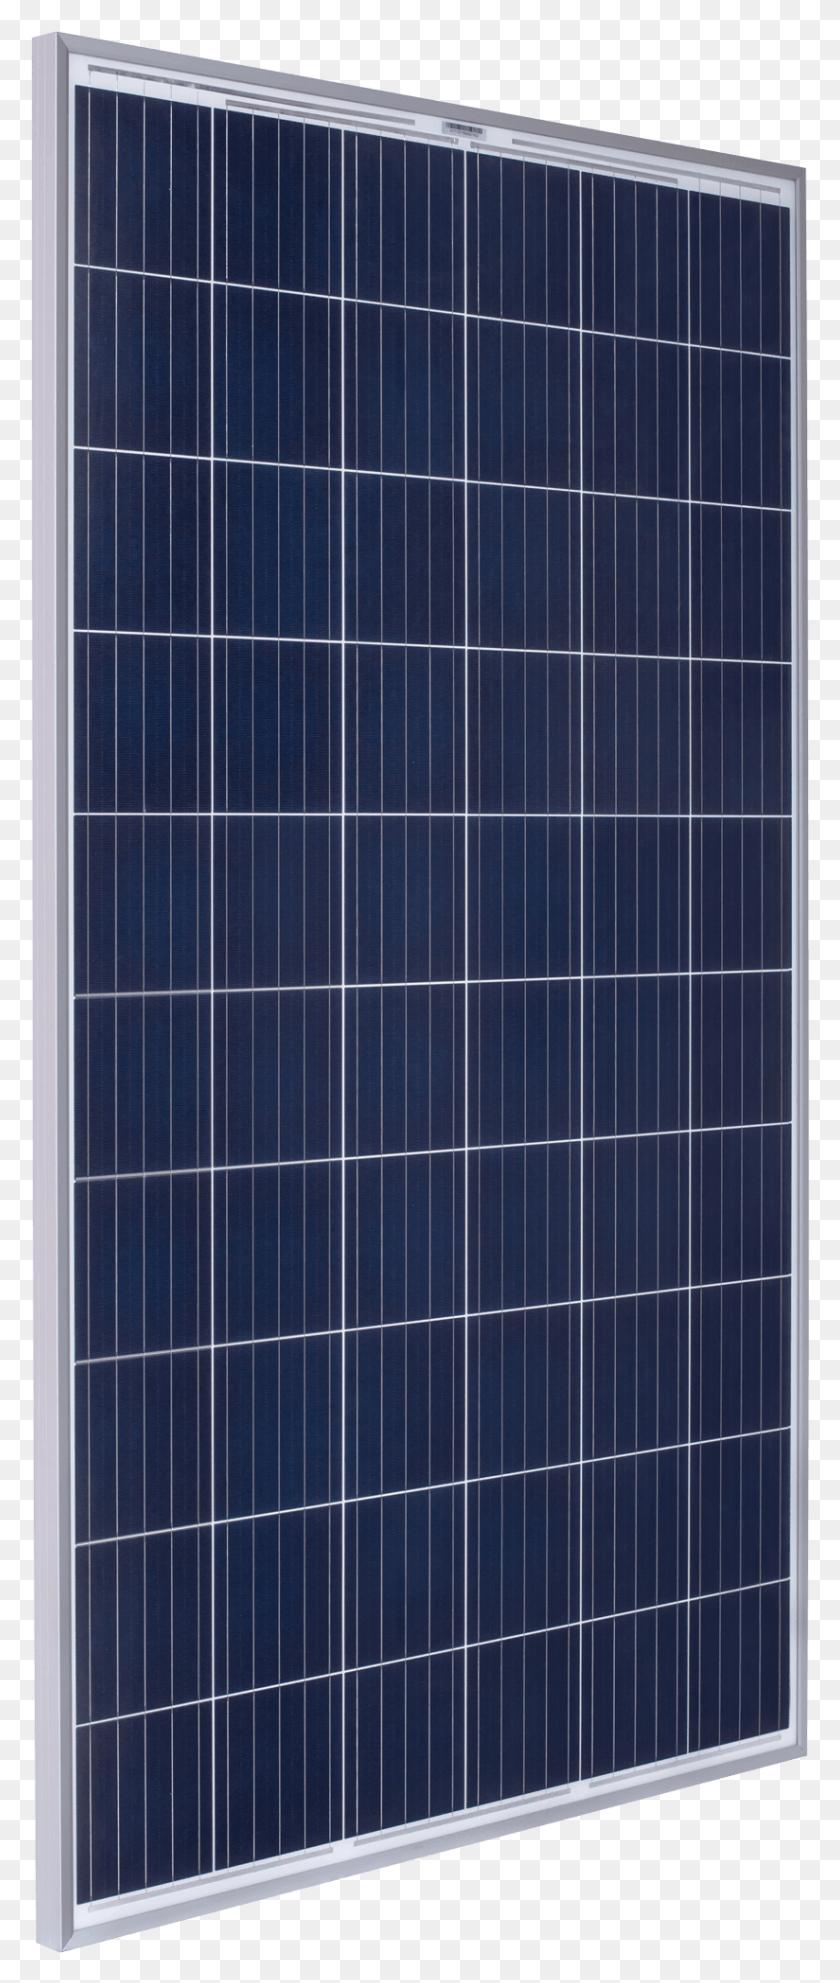 824x2032 Descargar Png / Sistema De Energía Solar, Cargador De Batería Solar Para Motores De Trolling, Dispositivo Eléctrico, Paneles Solares Hd Png